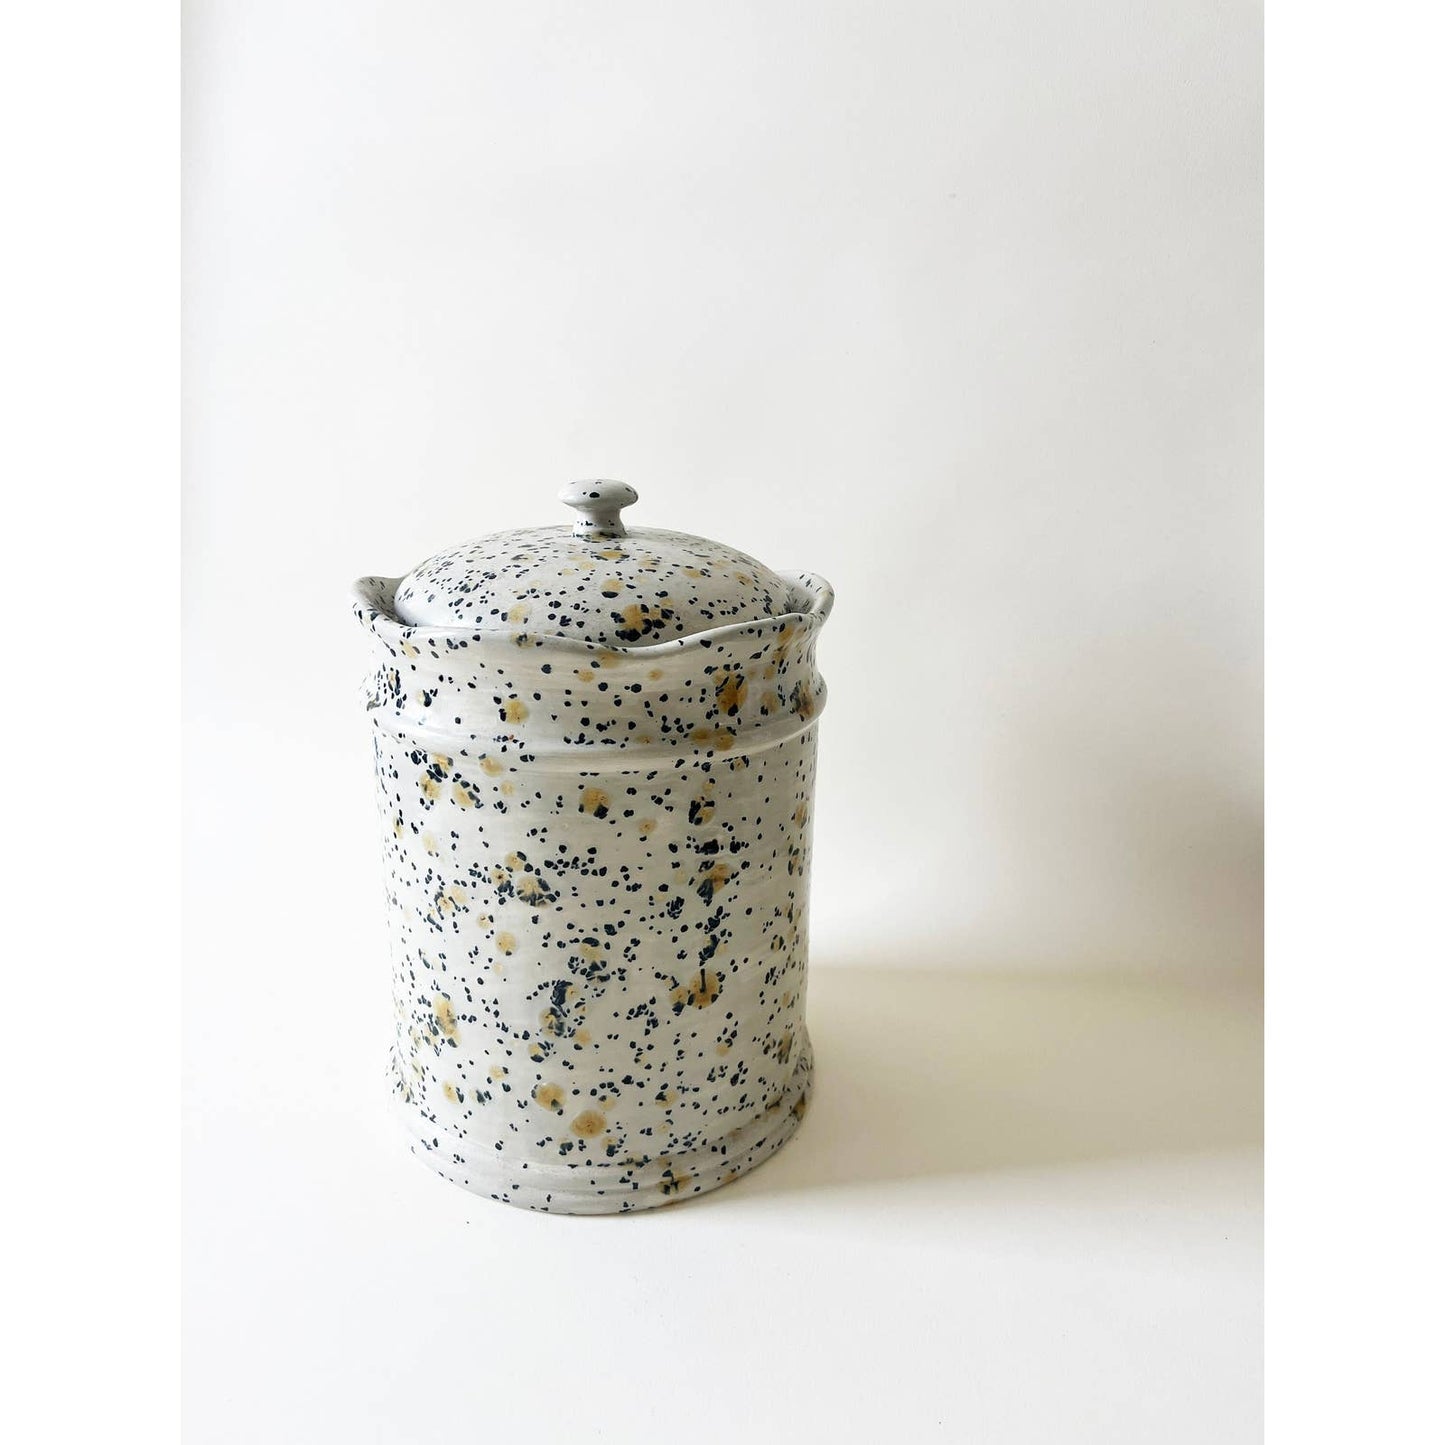 Vintage Black and Yellow Speckled Ceramic Jar, Mid Century Cookie Jar with Lid